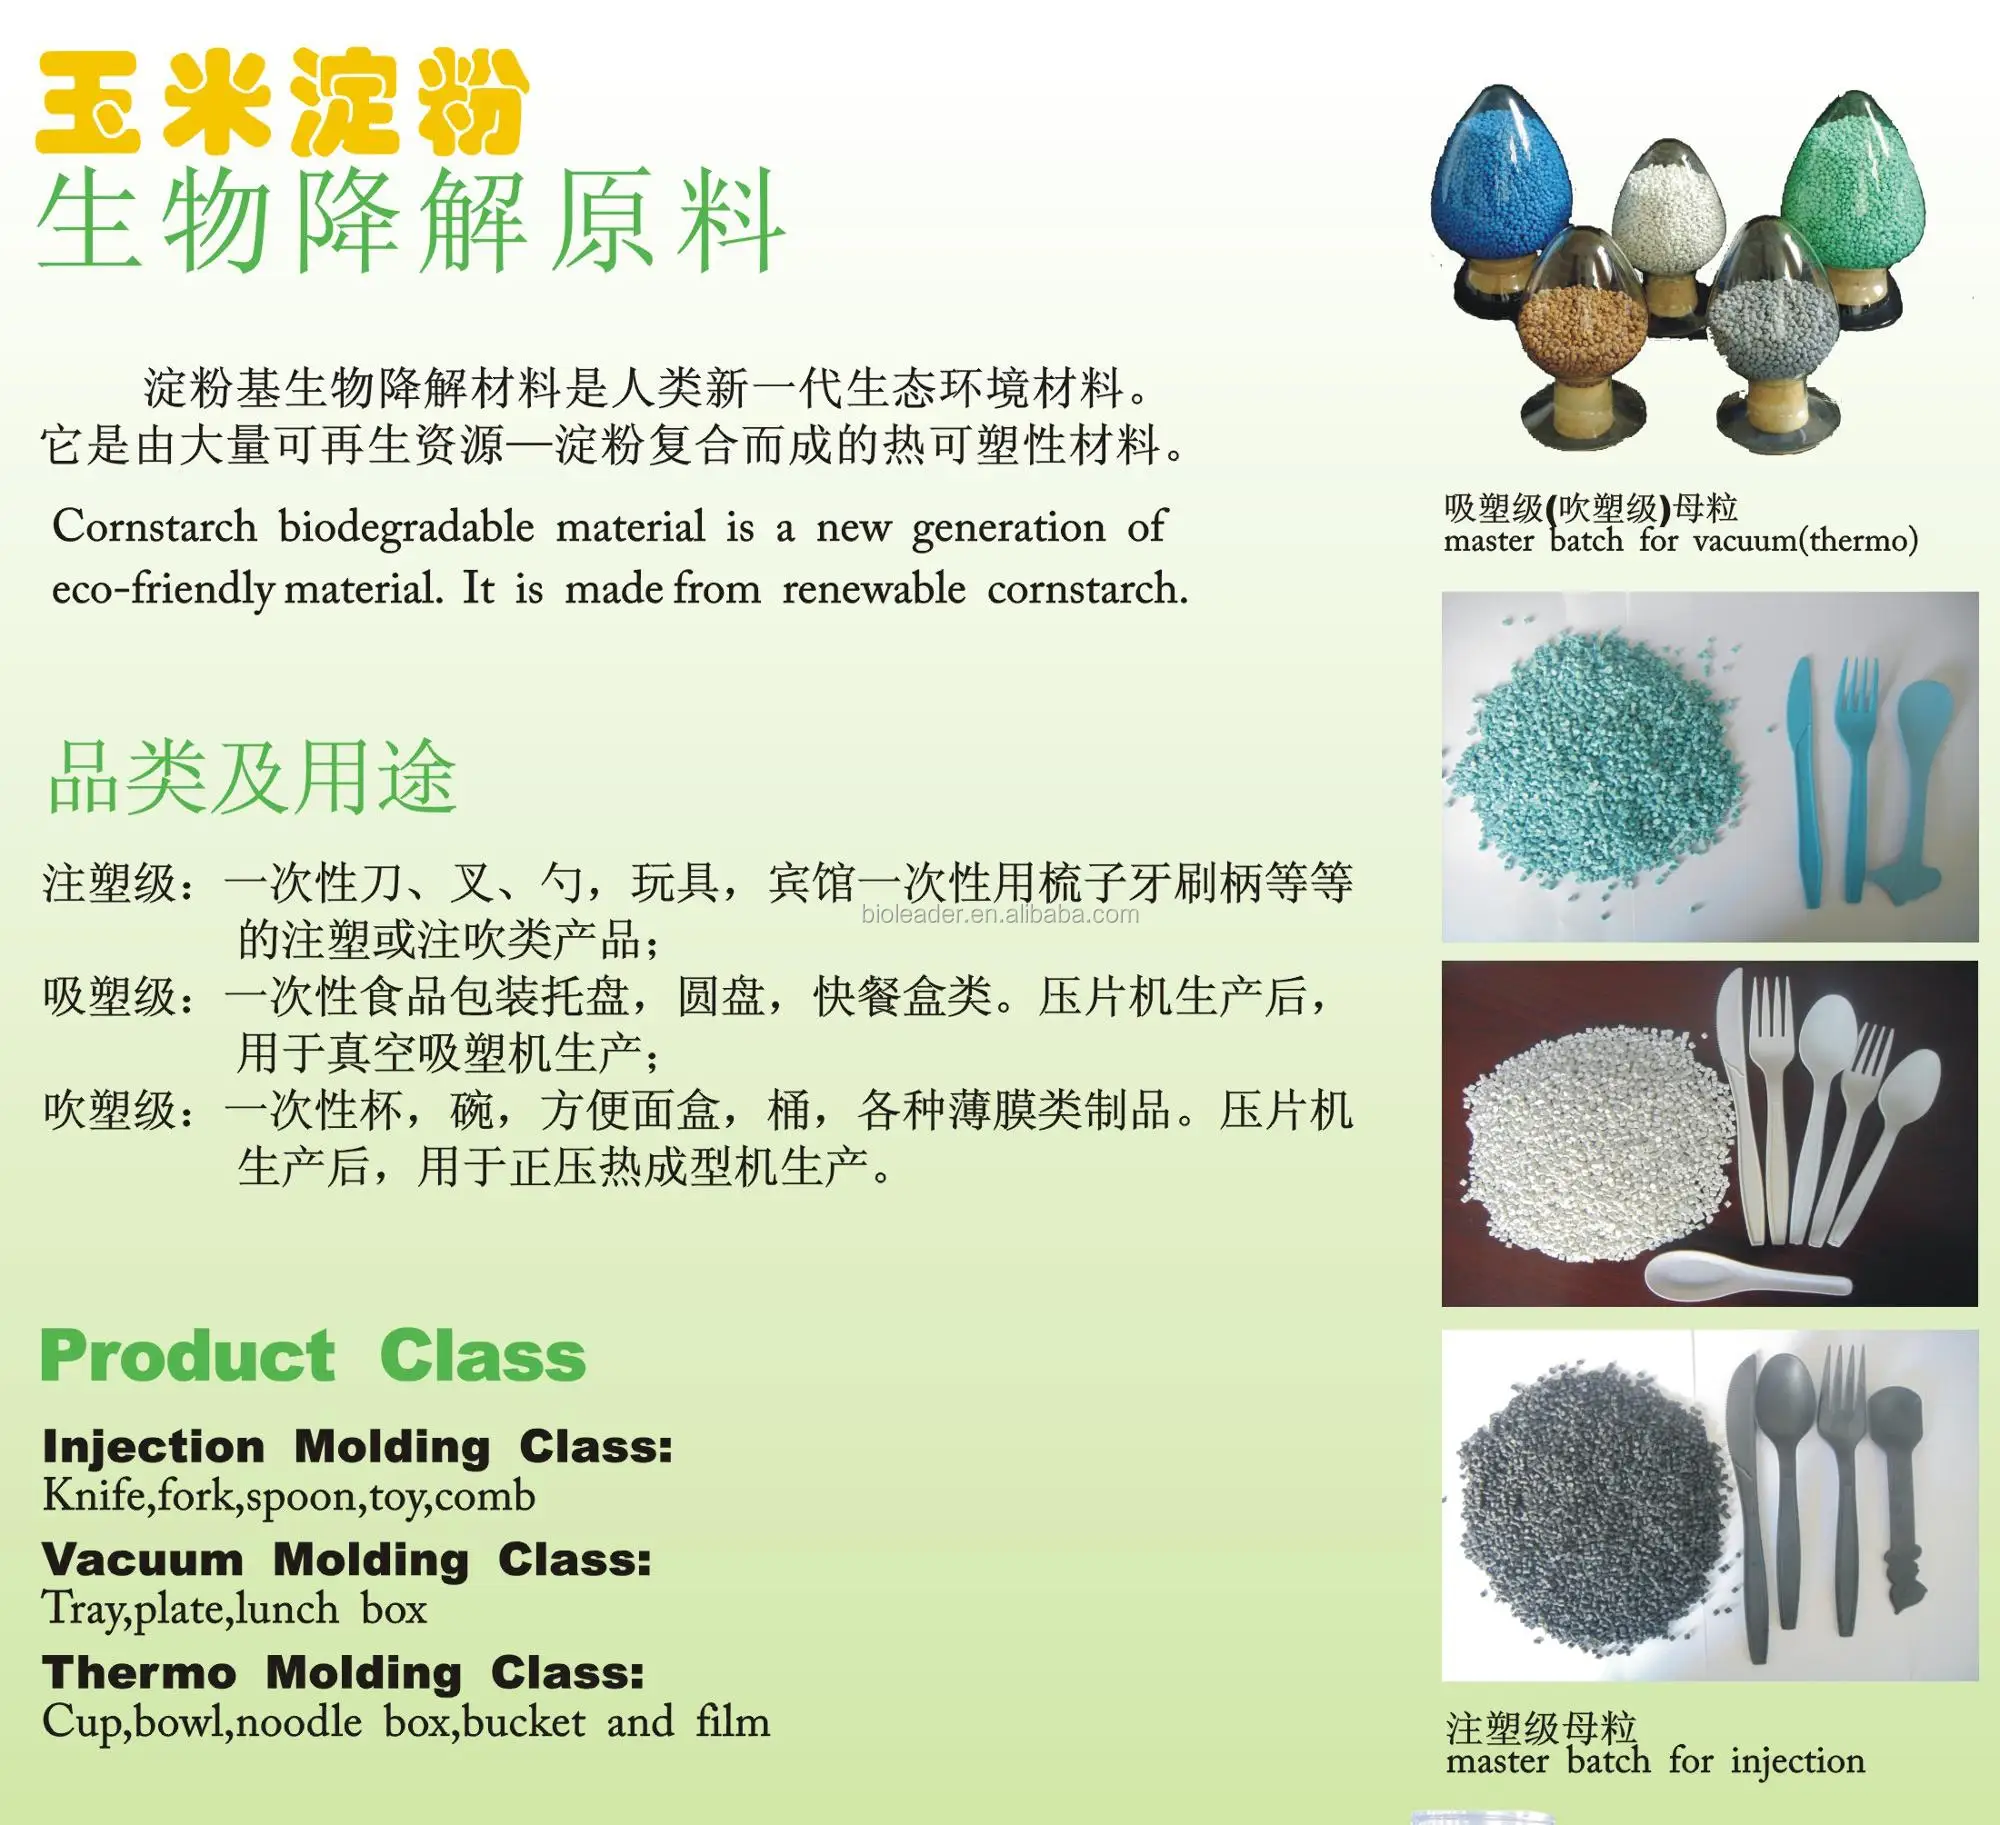 6 7 8 9 10 inch Wholesale Biodegradable Disposable Cornstarch Plastic Round Plates